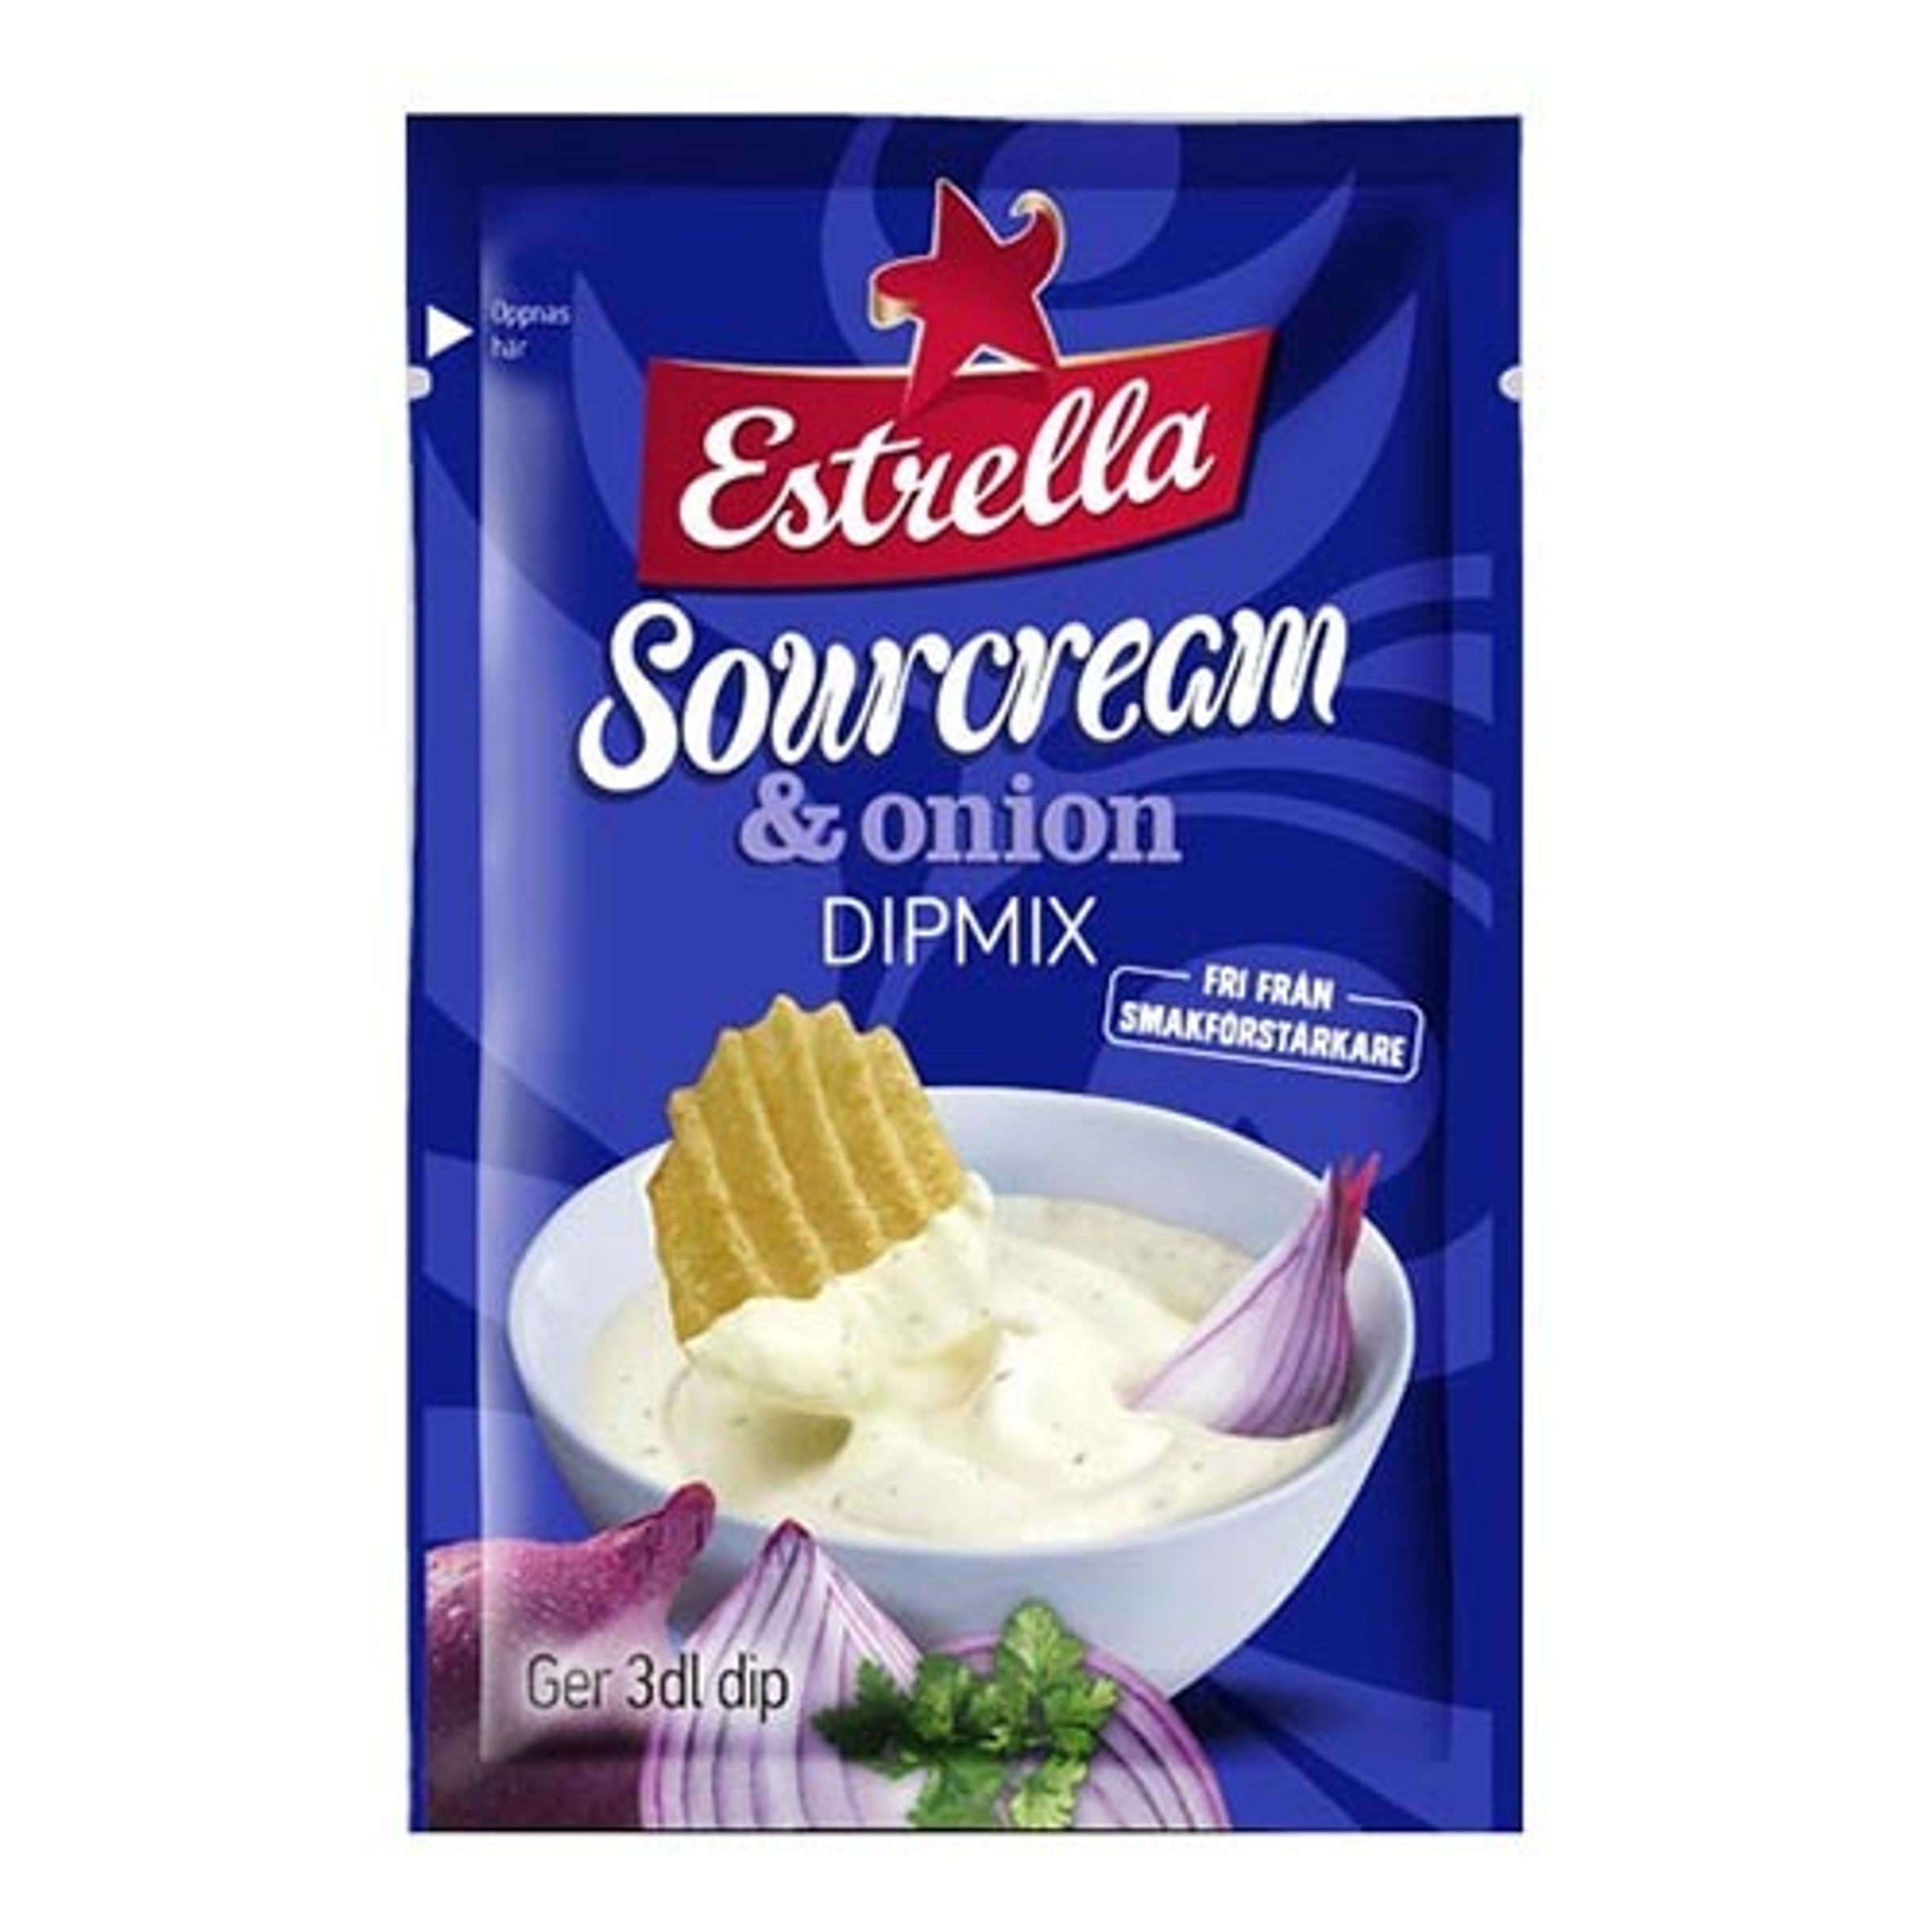 Estrella Dipmix Sourcream & Onion